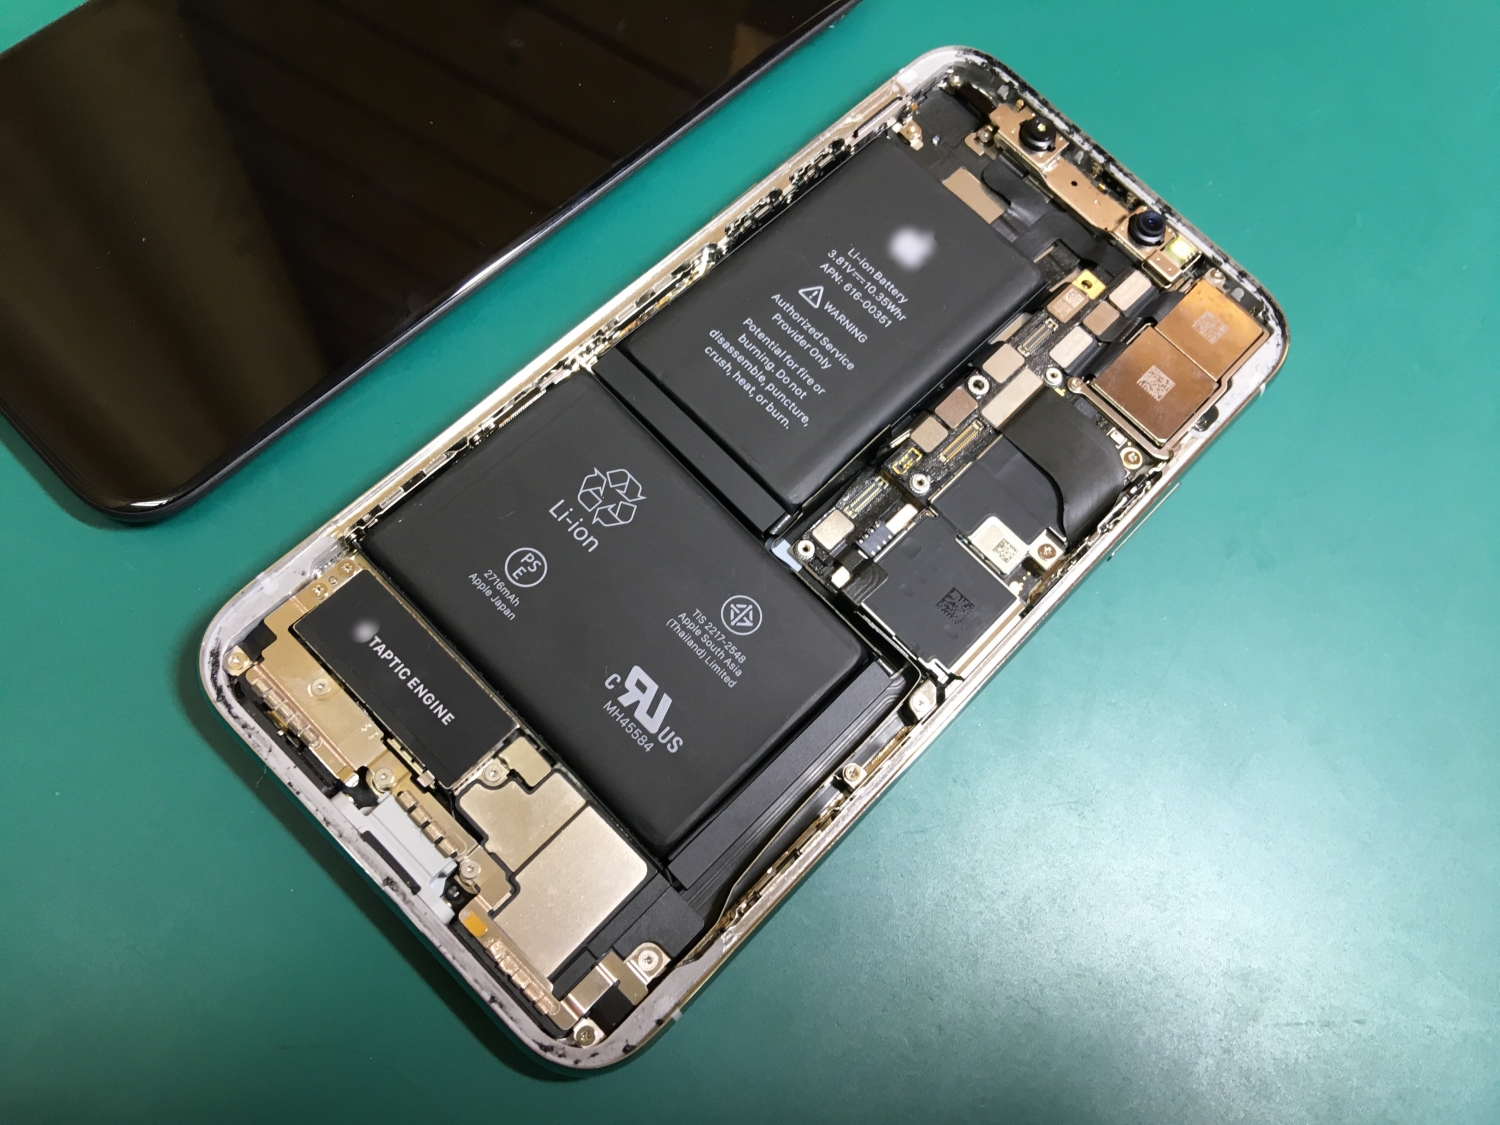 iPhoneXバッテリー交換修理のご依頼をいただきました。バッテリー最大容量を確認しましょう。